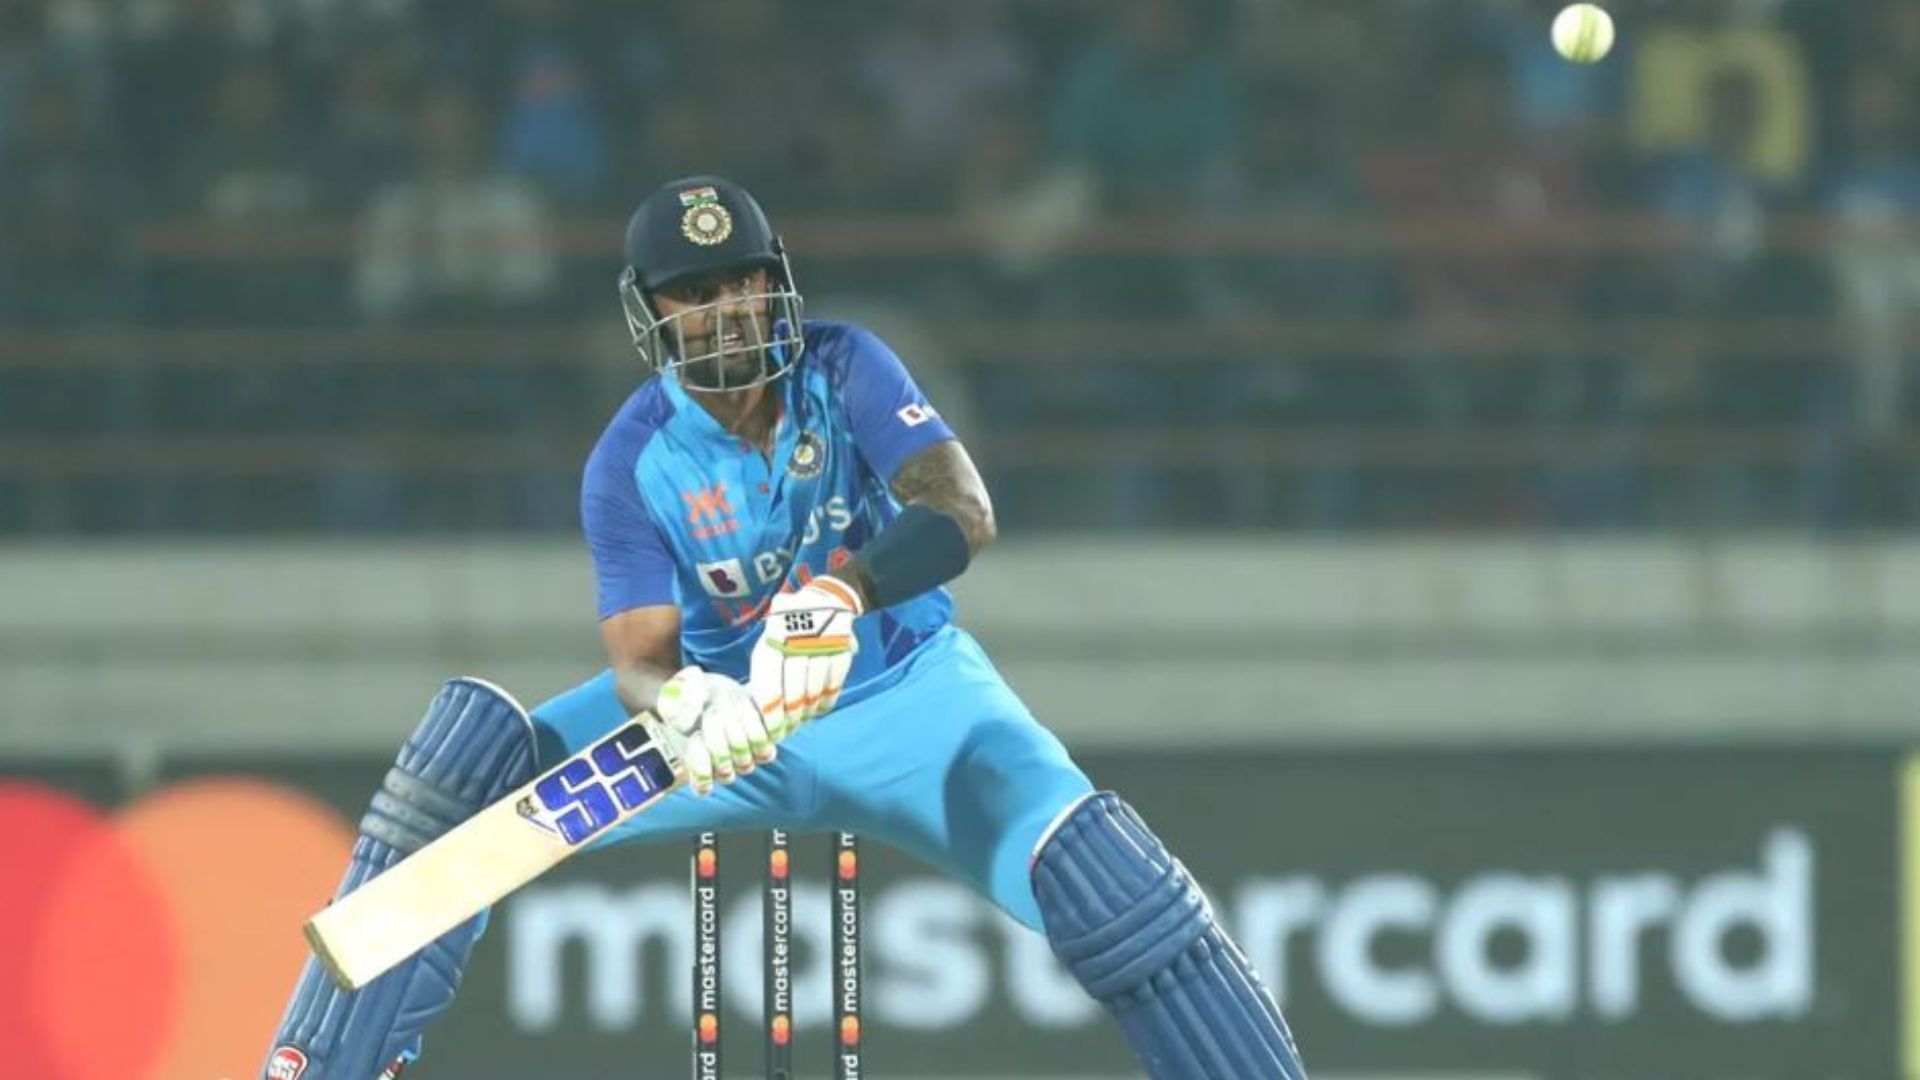 Suryakumar Yadav plays an audacious scoop shot during his century against Sri Lanka. 